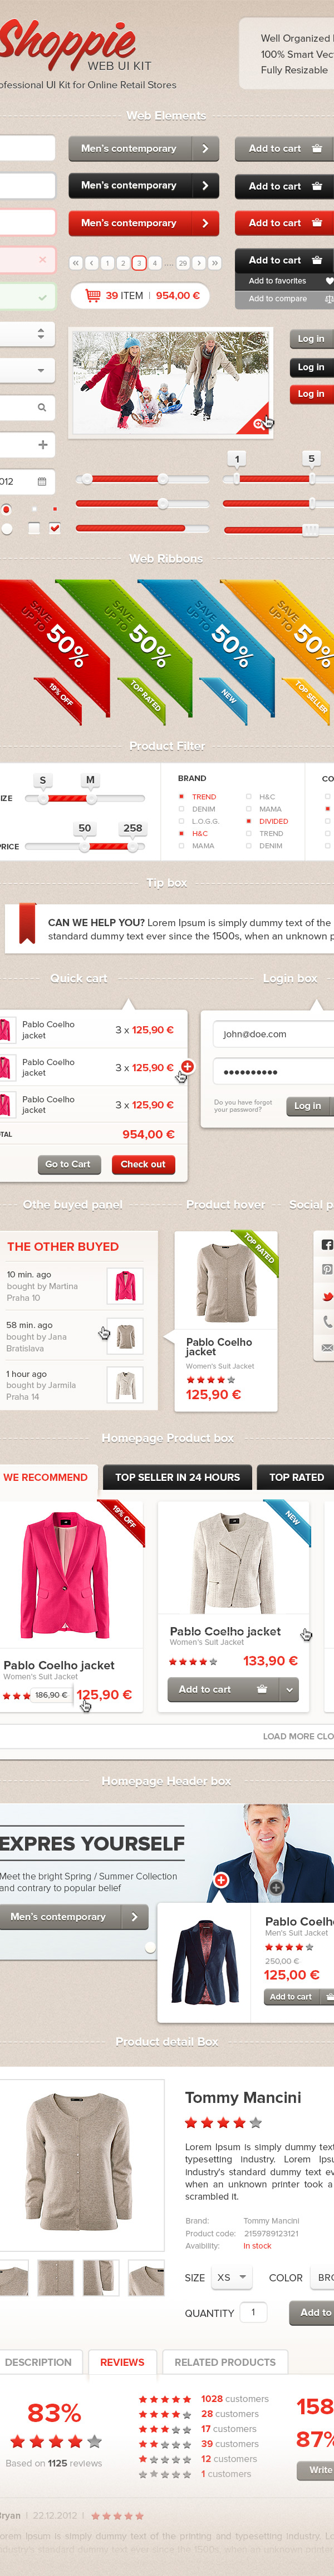 Shoppie UI user interface online retail store retail store Web UI